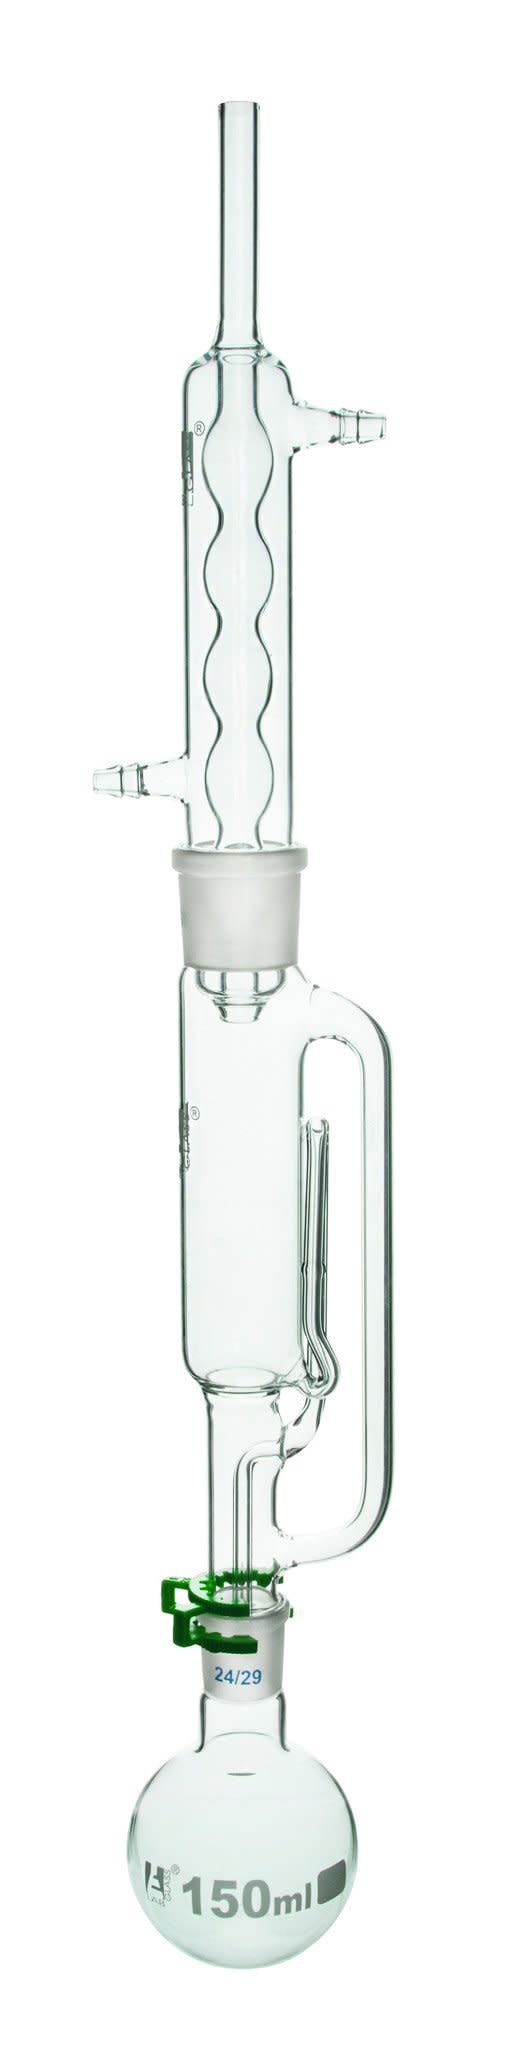 Soxhlet Extraction Apparatus, 600mL - Borosilicate Glass